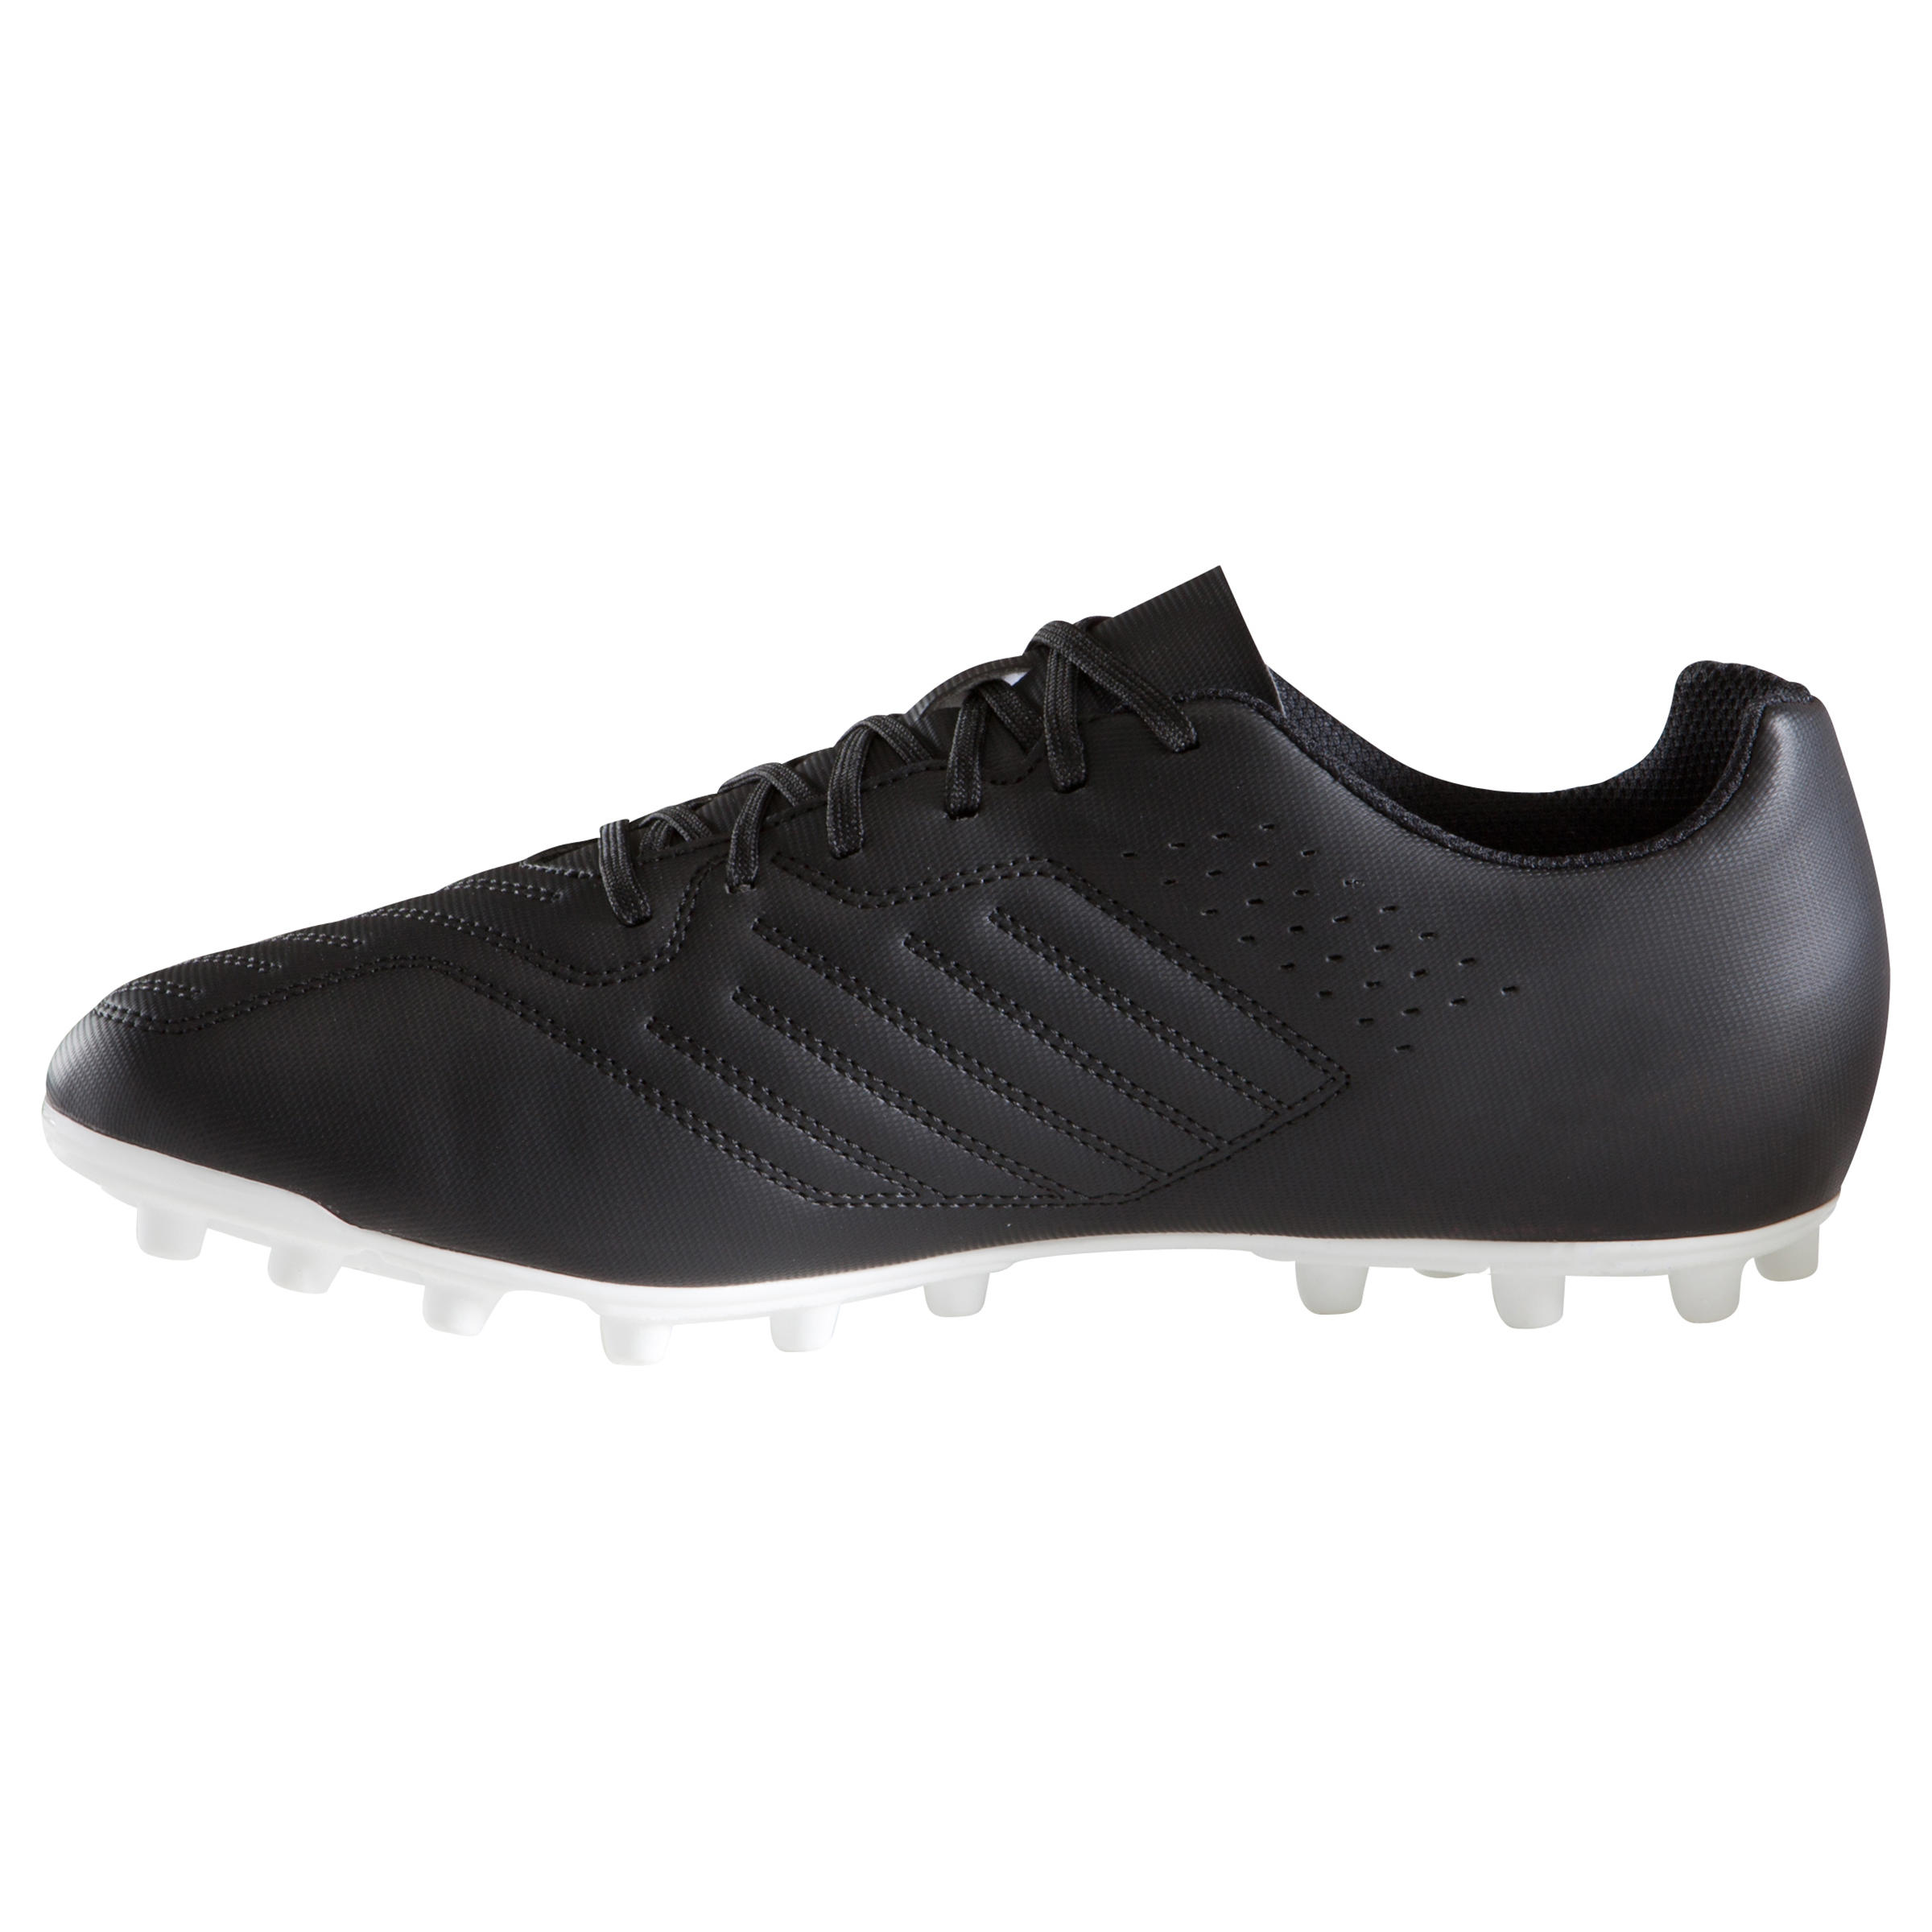 Kipsta agility 500 Hg football shoes (BRAND new) UK 8 - Sports Equipment -  1746162036